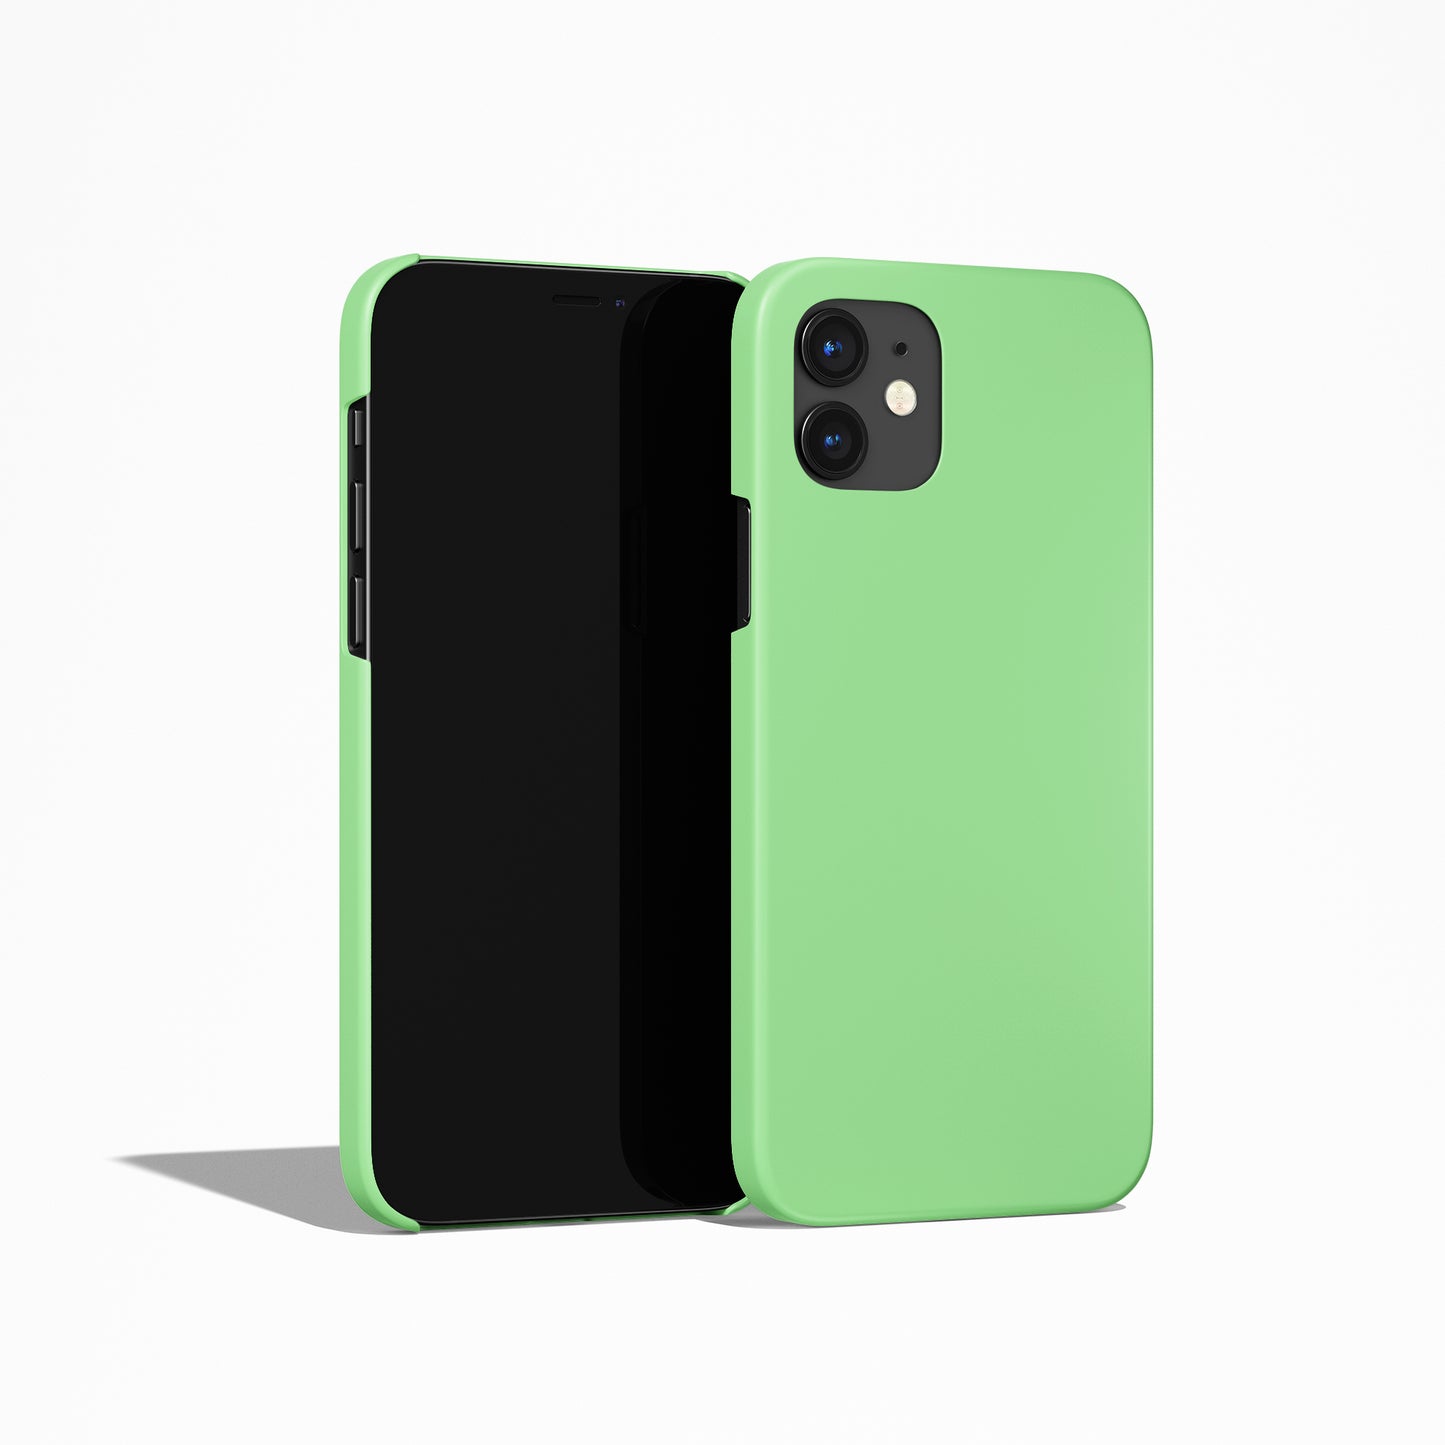 Retro Green iPhone Case